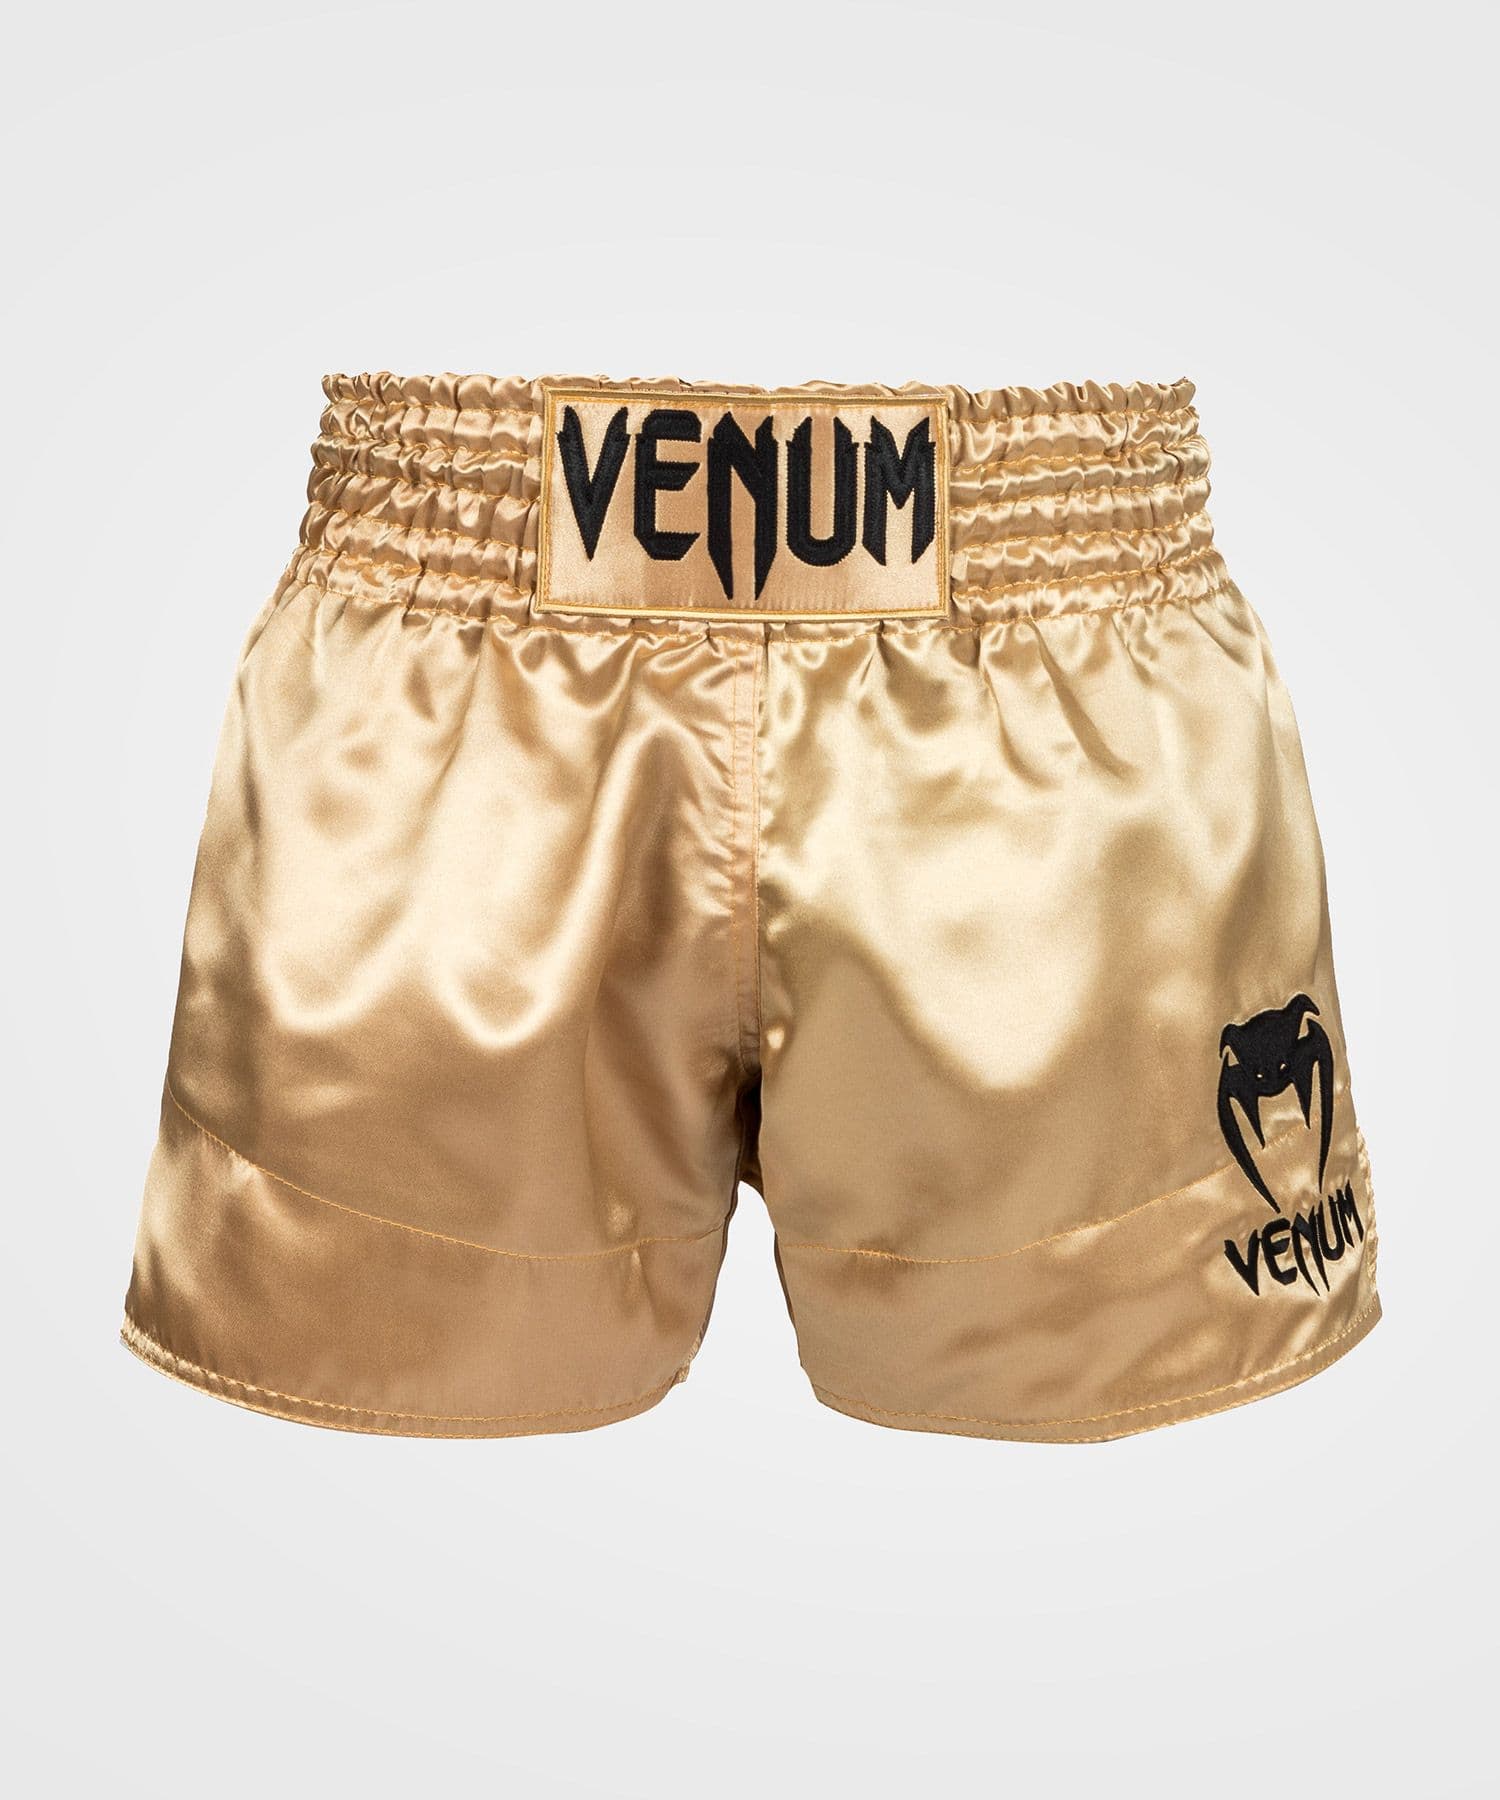 Venum Classic Muay Thai Hose gold / schwarz > Free Shipping